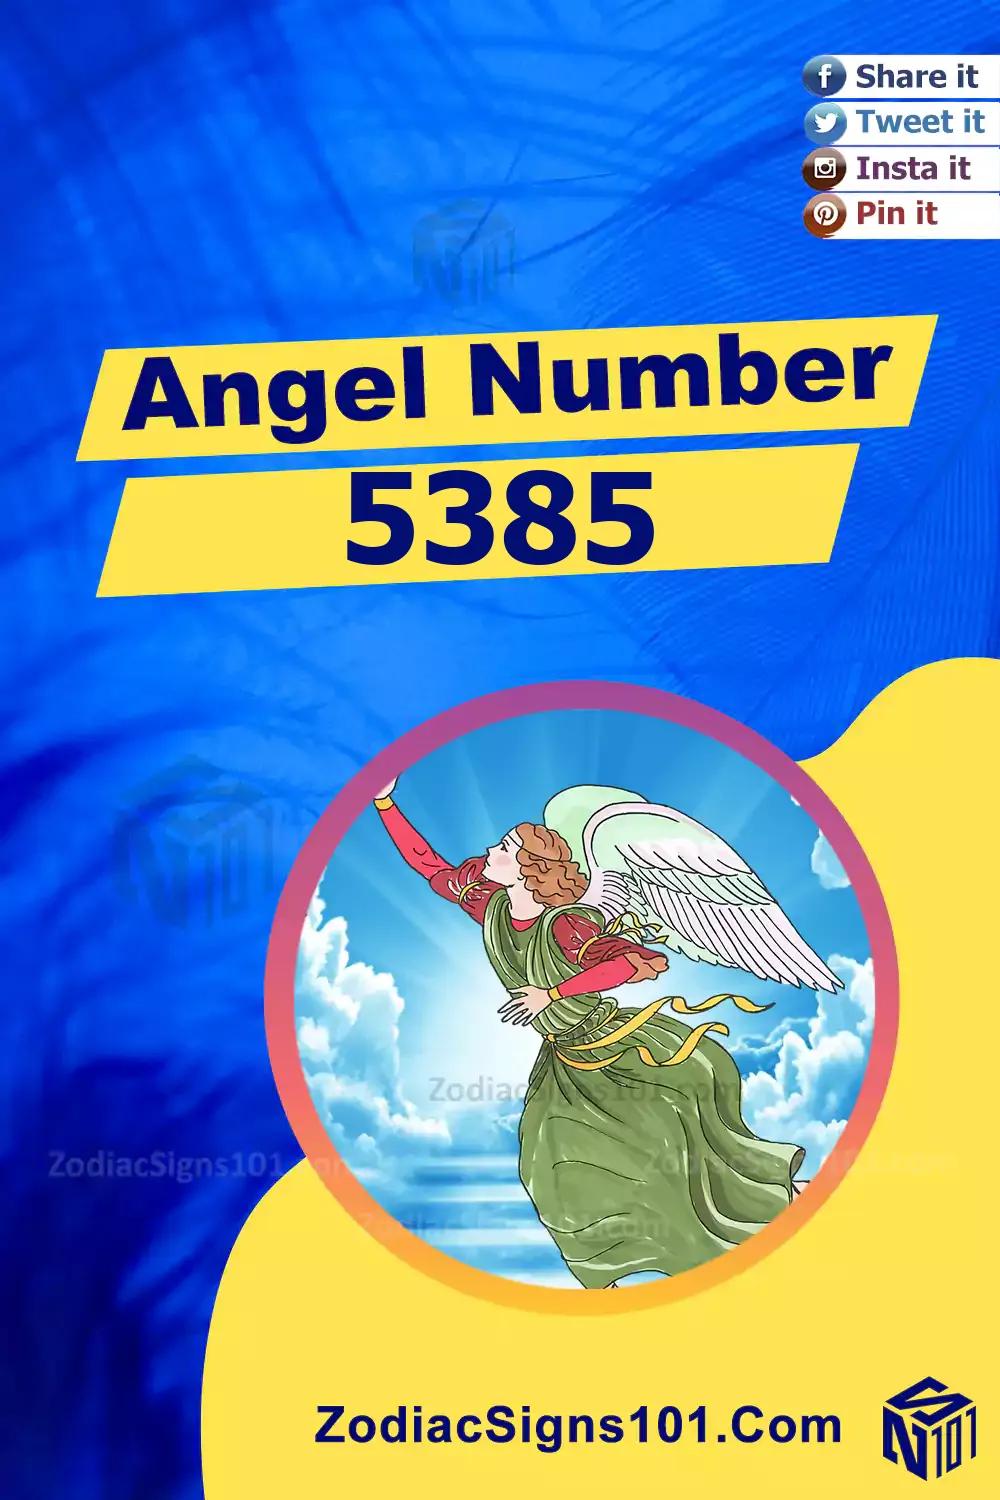 5385-Angel-Number-Meaning.jpg